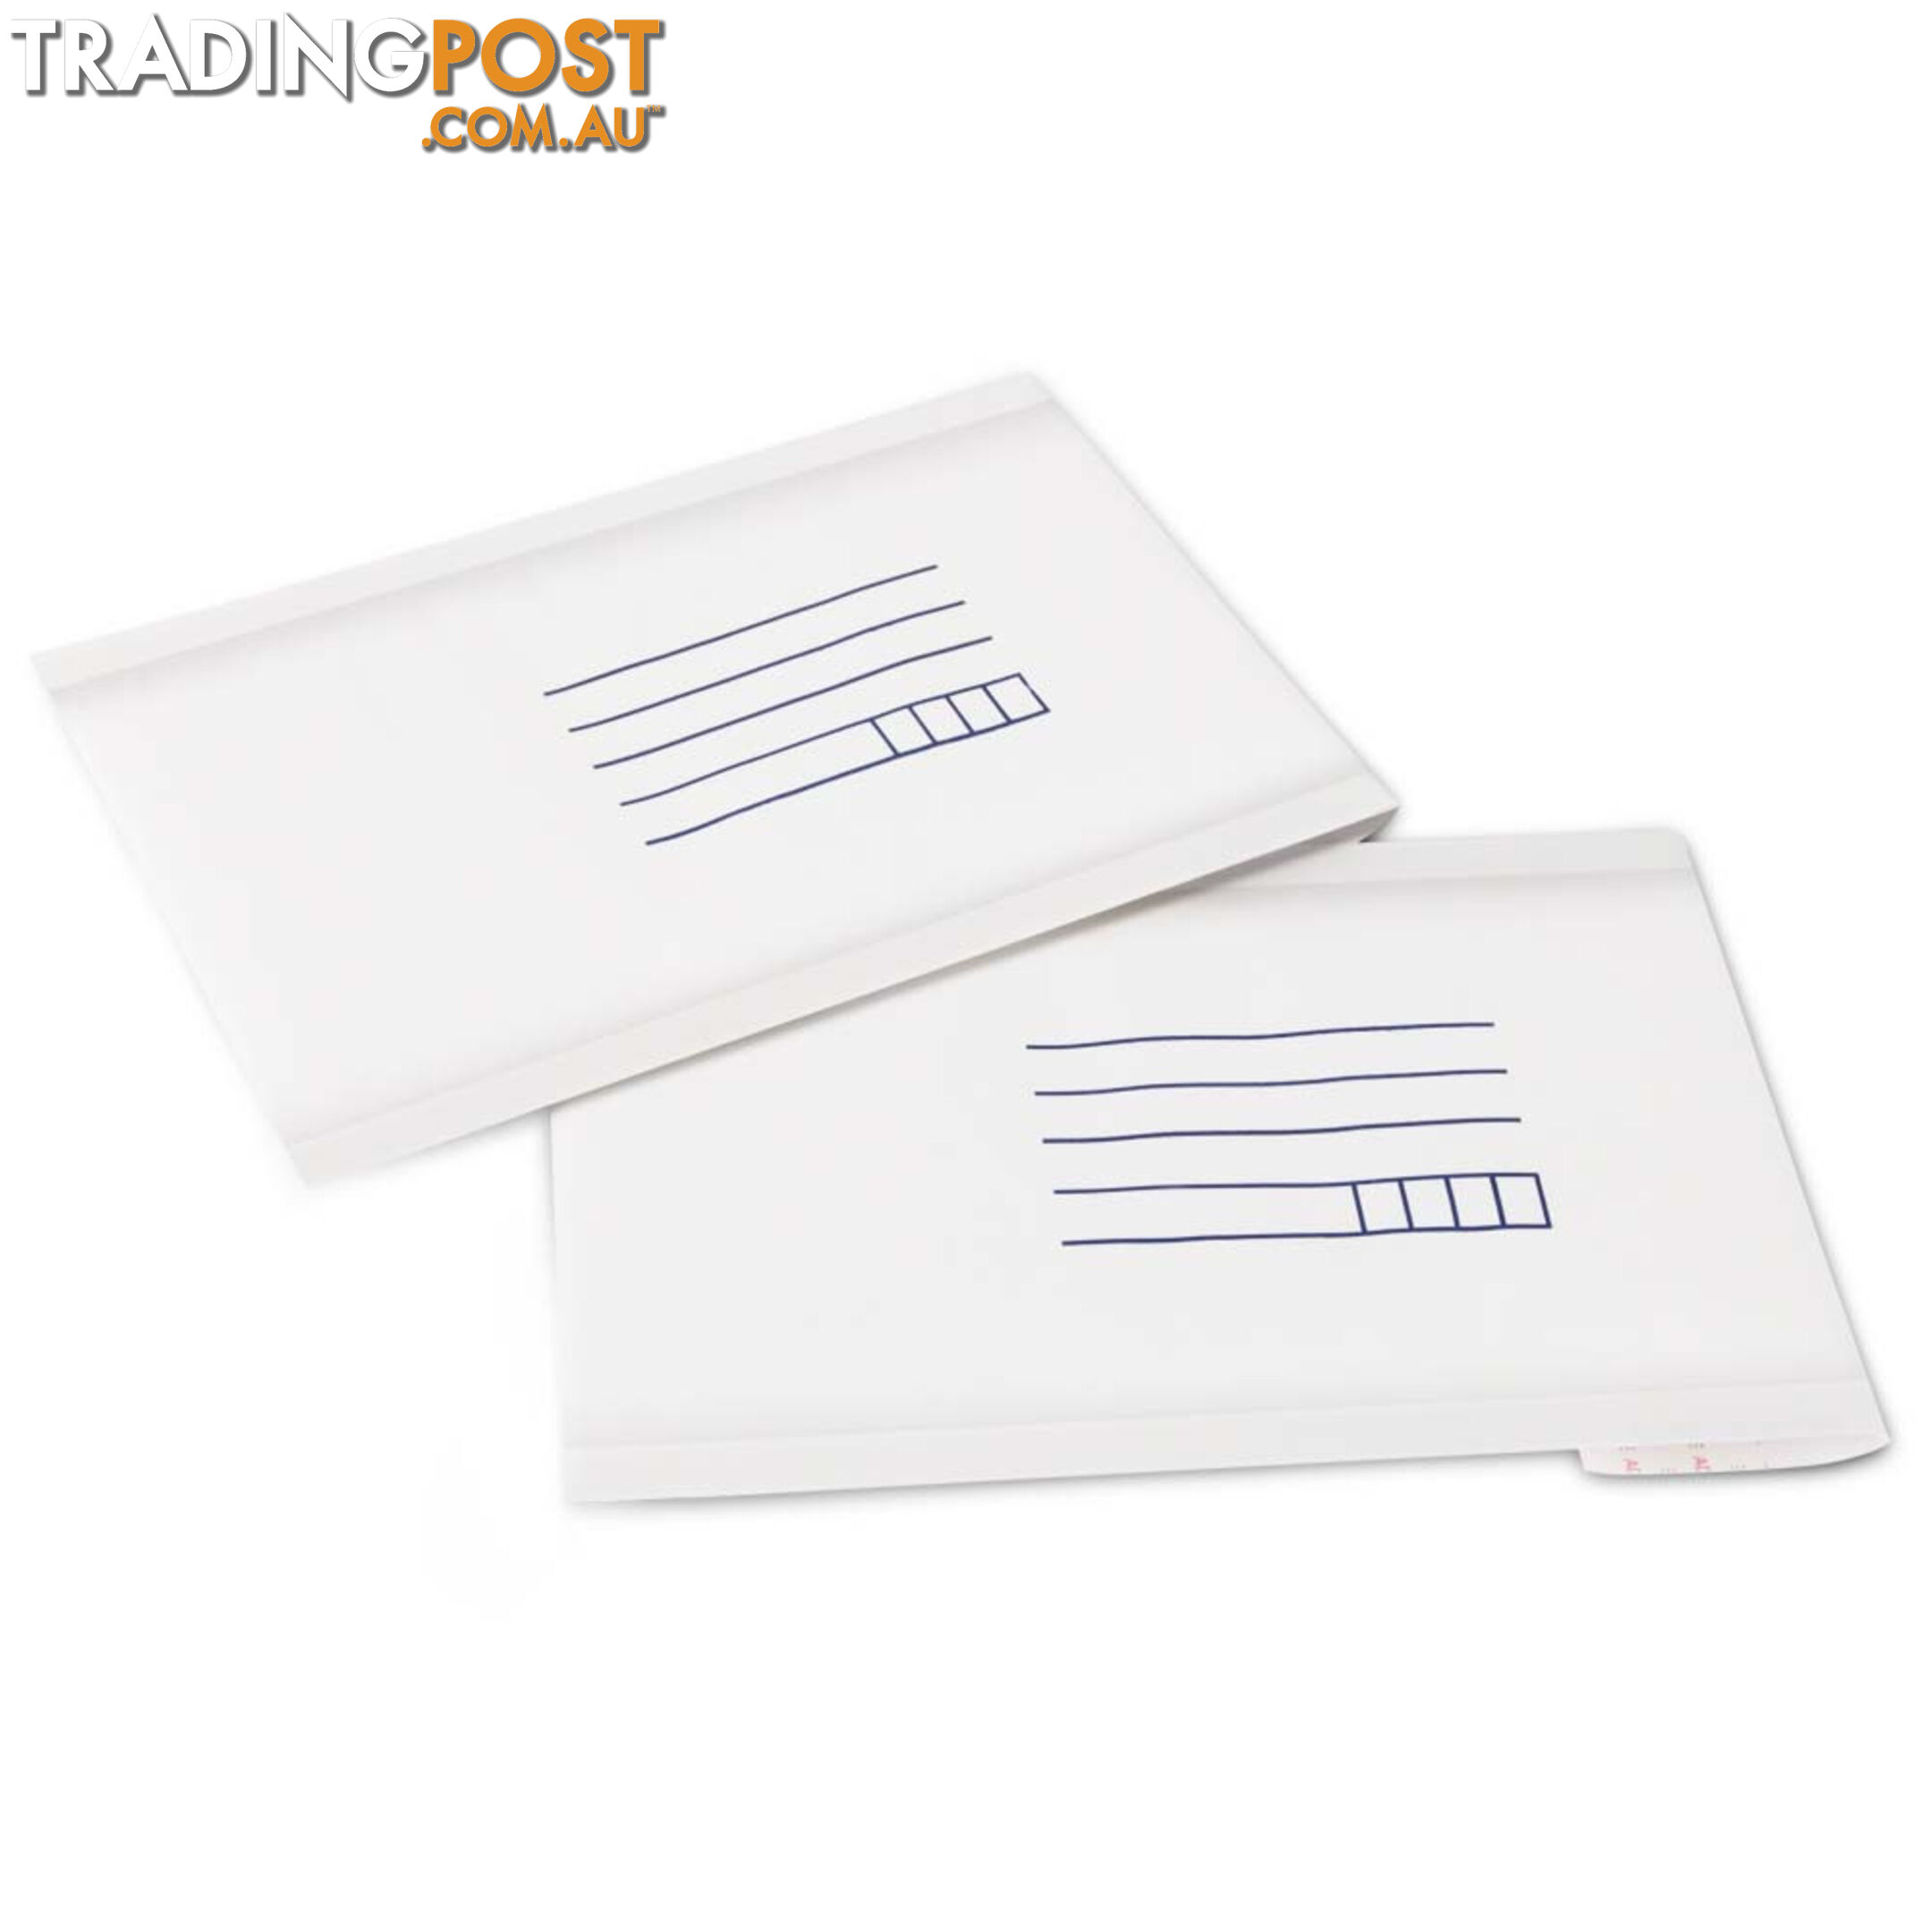 Bubble Padded Mail Envelopes 200pcs 160mm x 230mm